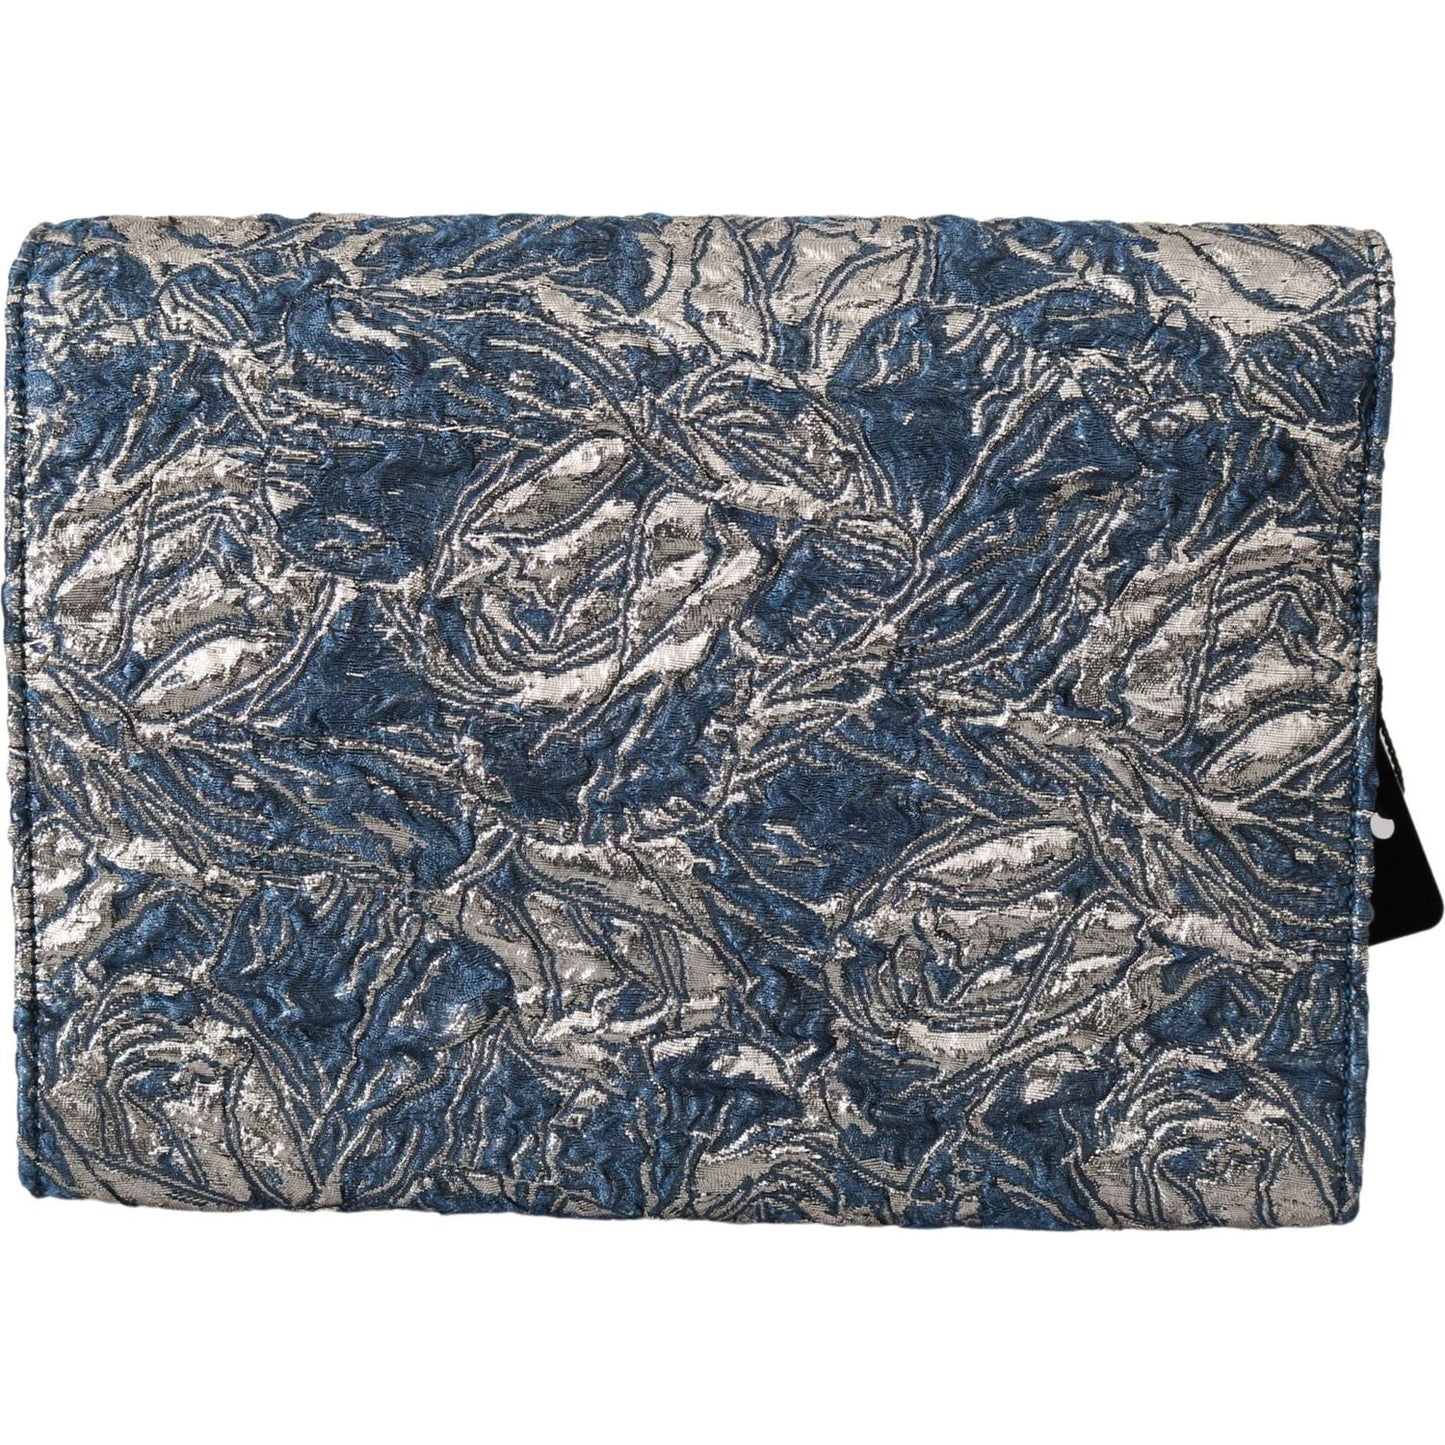 Dolce & Gabbana Elegant Blue Croc-Print Briefcase Clutch blue-silver-jacquard-leather-document-briefcase-bag Briefcase IMG_0200-1-bdab65d3-c81.jpg